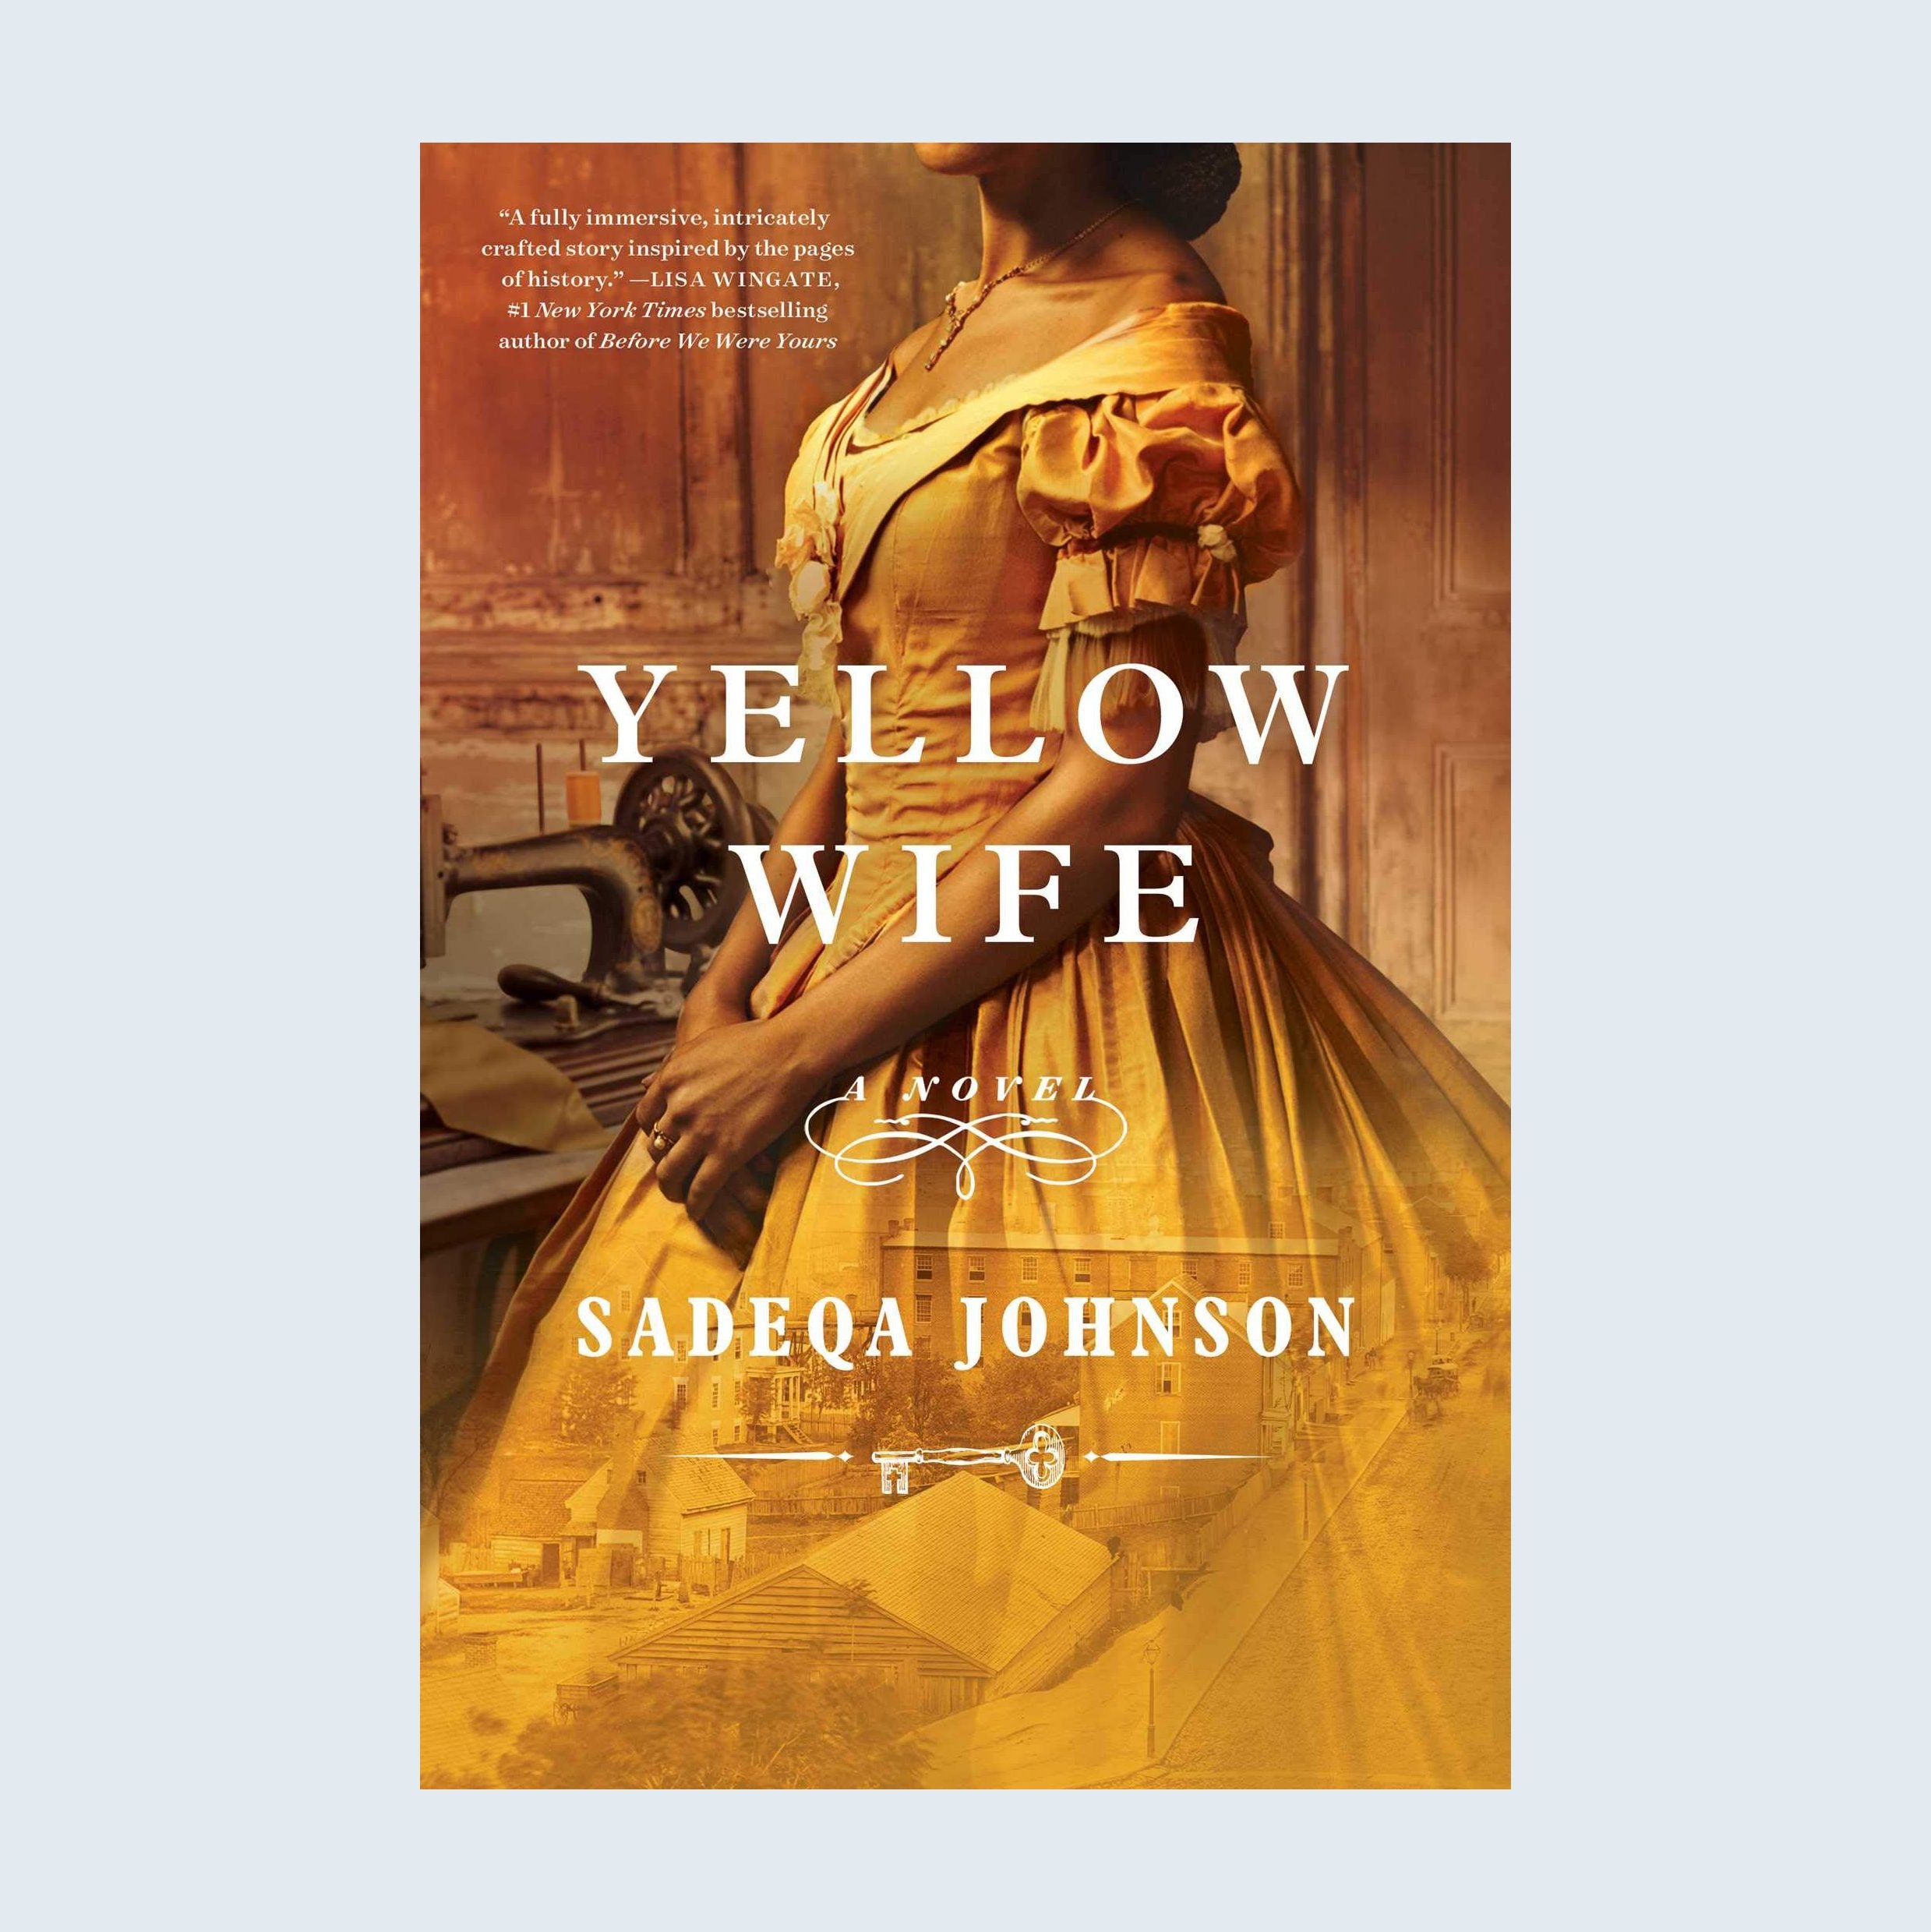 Yellow wife book